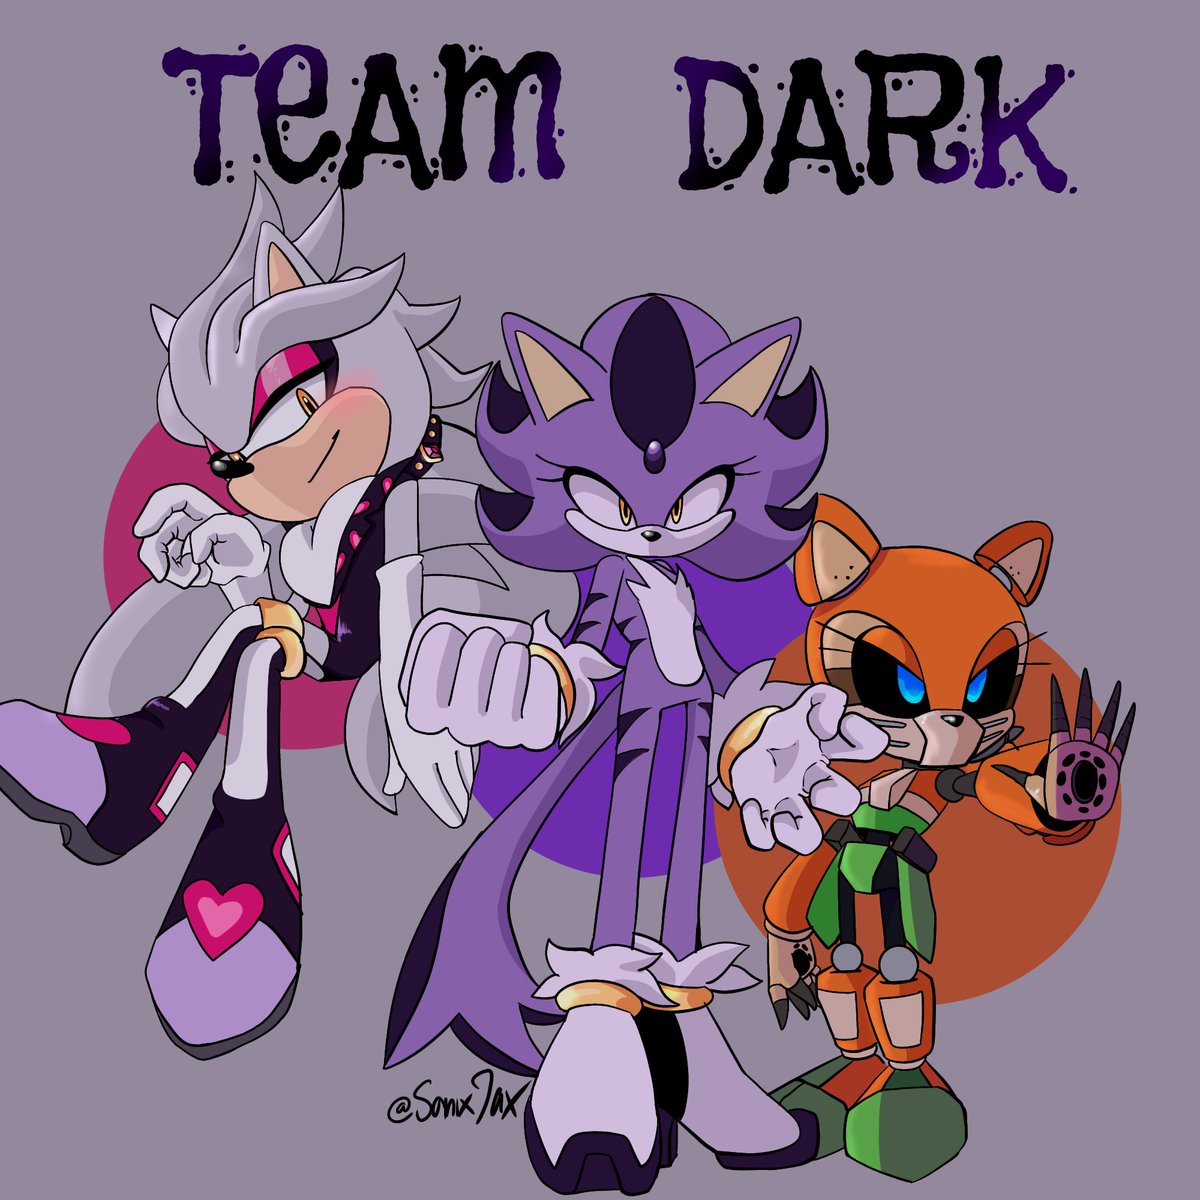 Team Dark is done!
#SilverTheHedgehog #BlazeTheCat #MarinetheRaccoon #sonicfanart #SonicTheHedgehog #TeamSwapAU